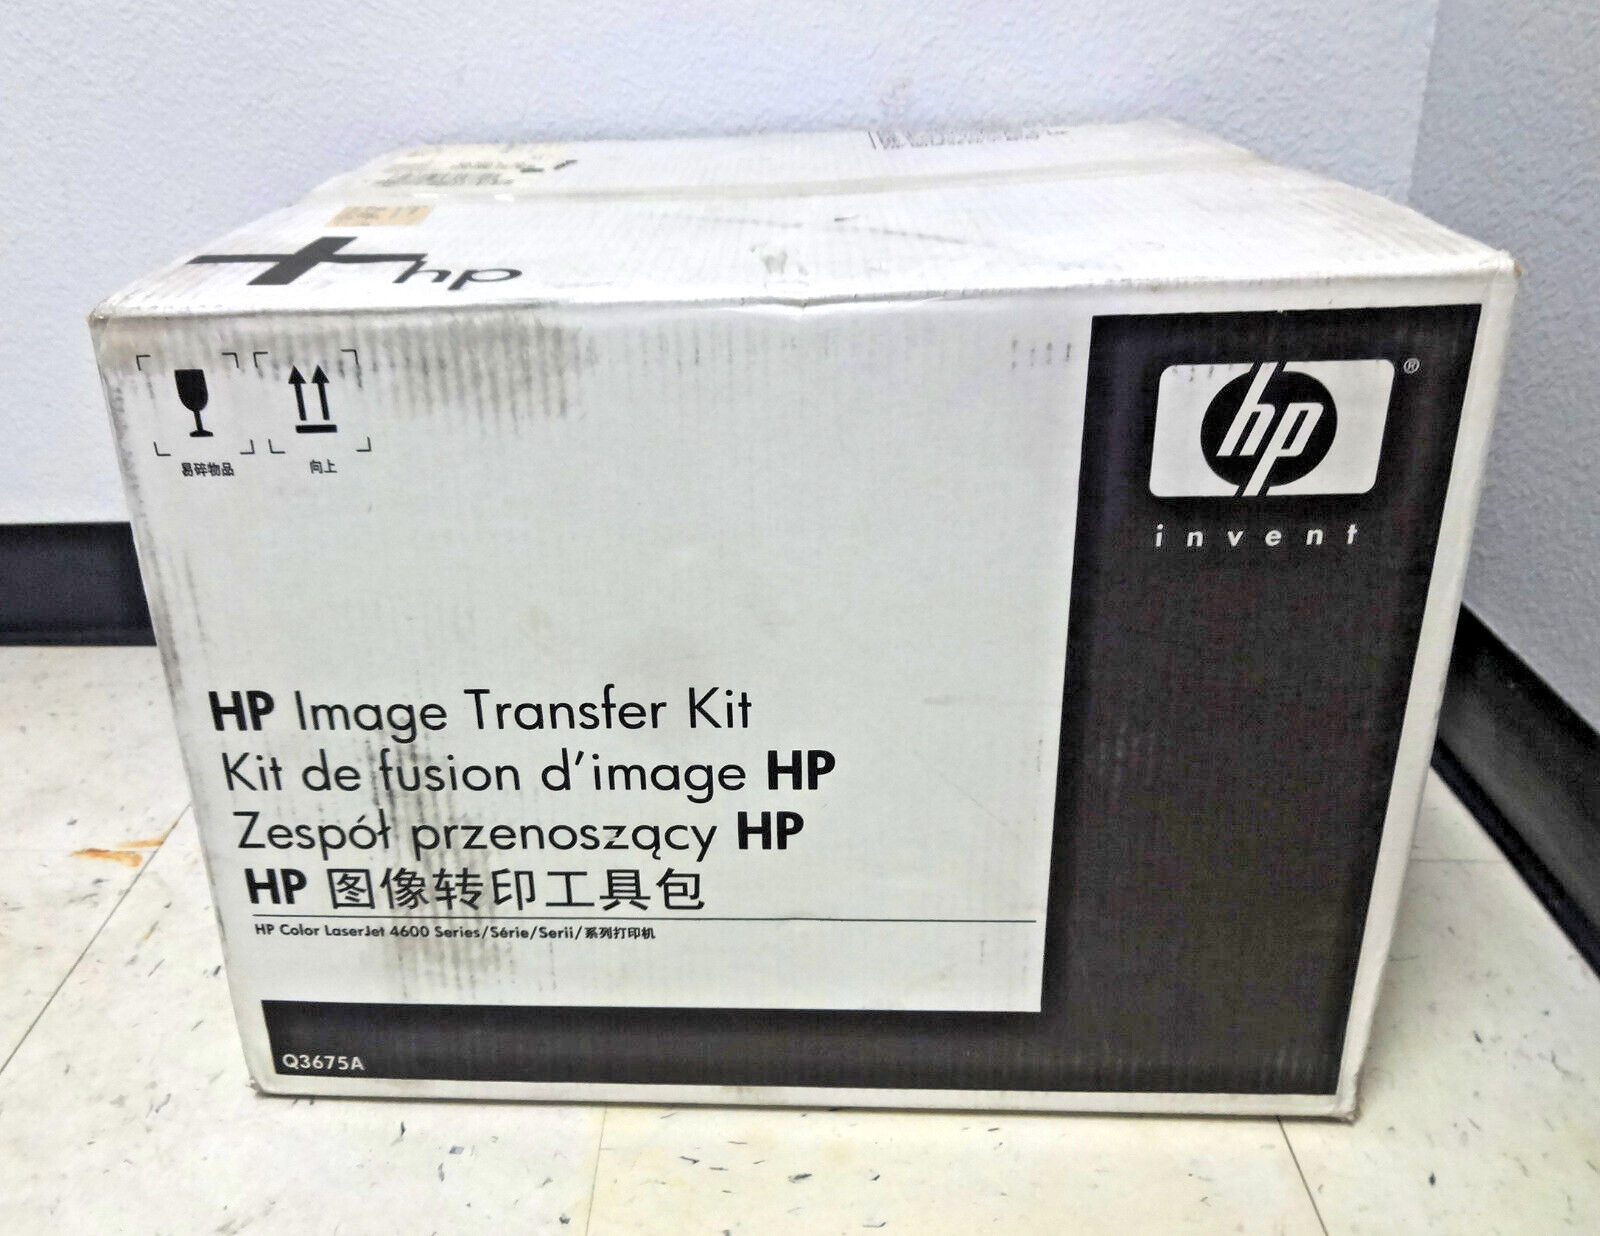 NEW HP Q3675A Color Laser Jet 4600 4650 Image Transfer Kit Sealed Box